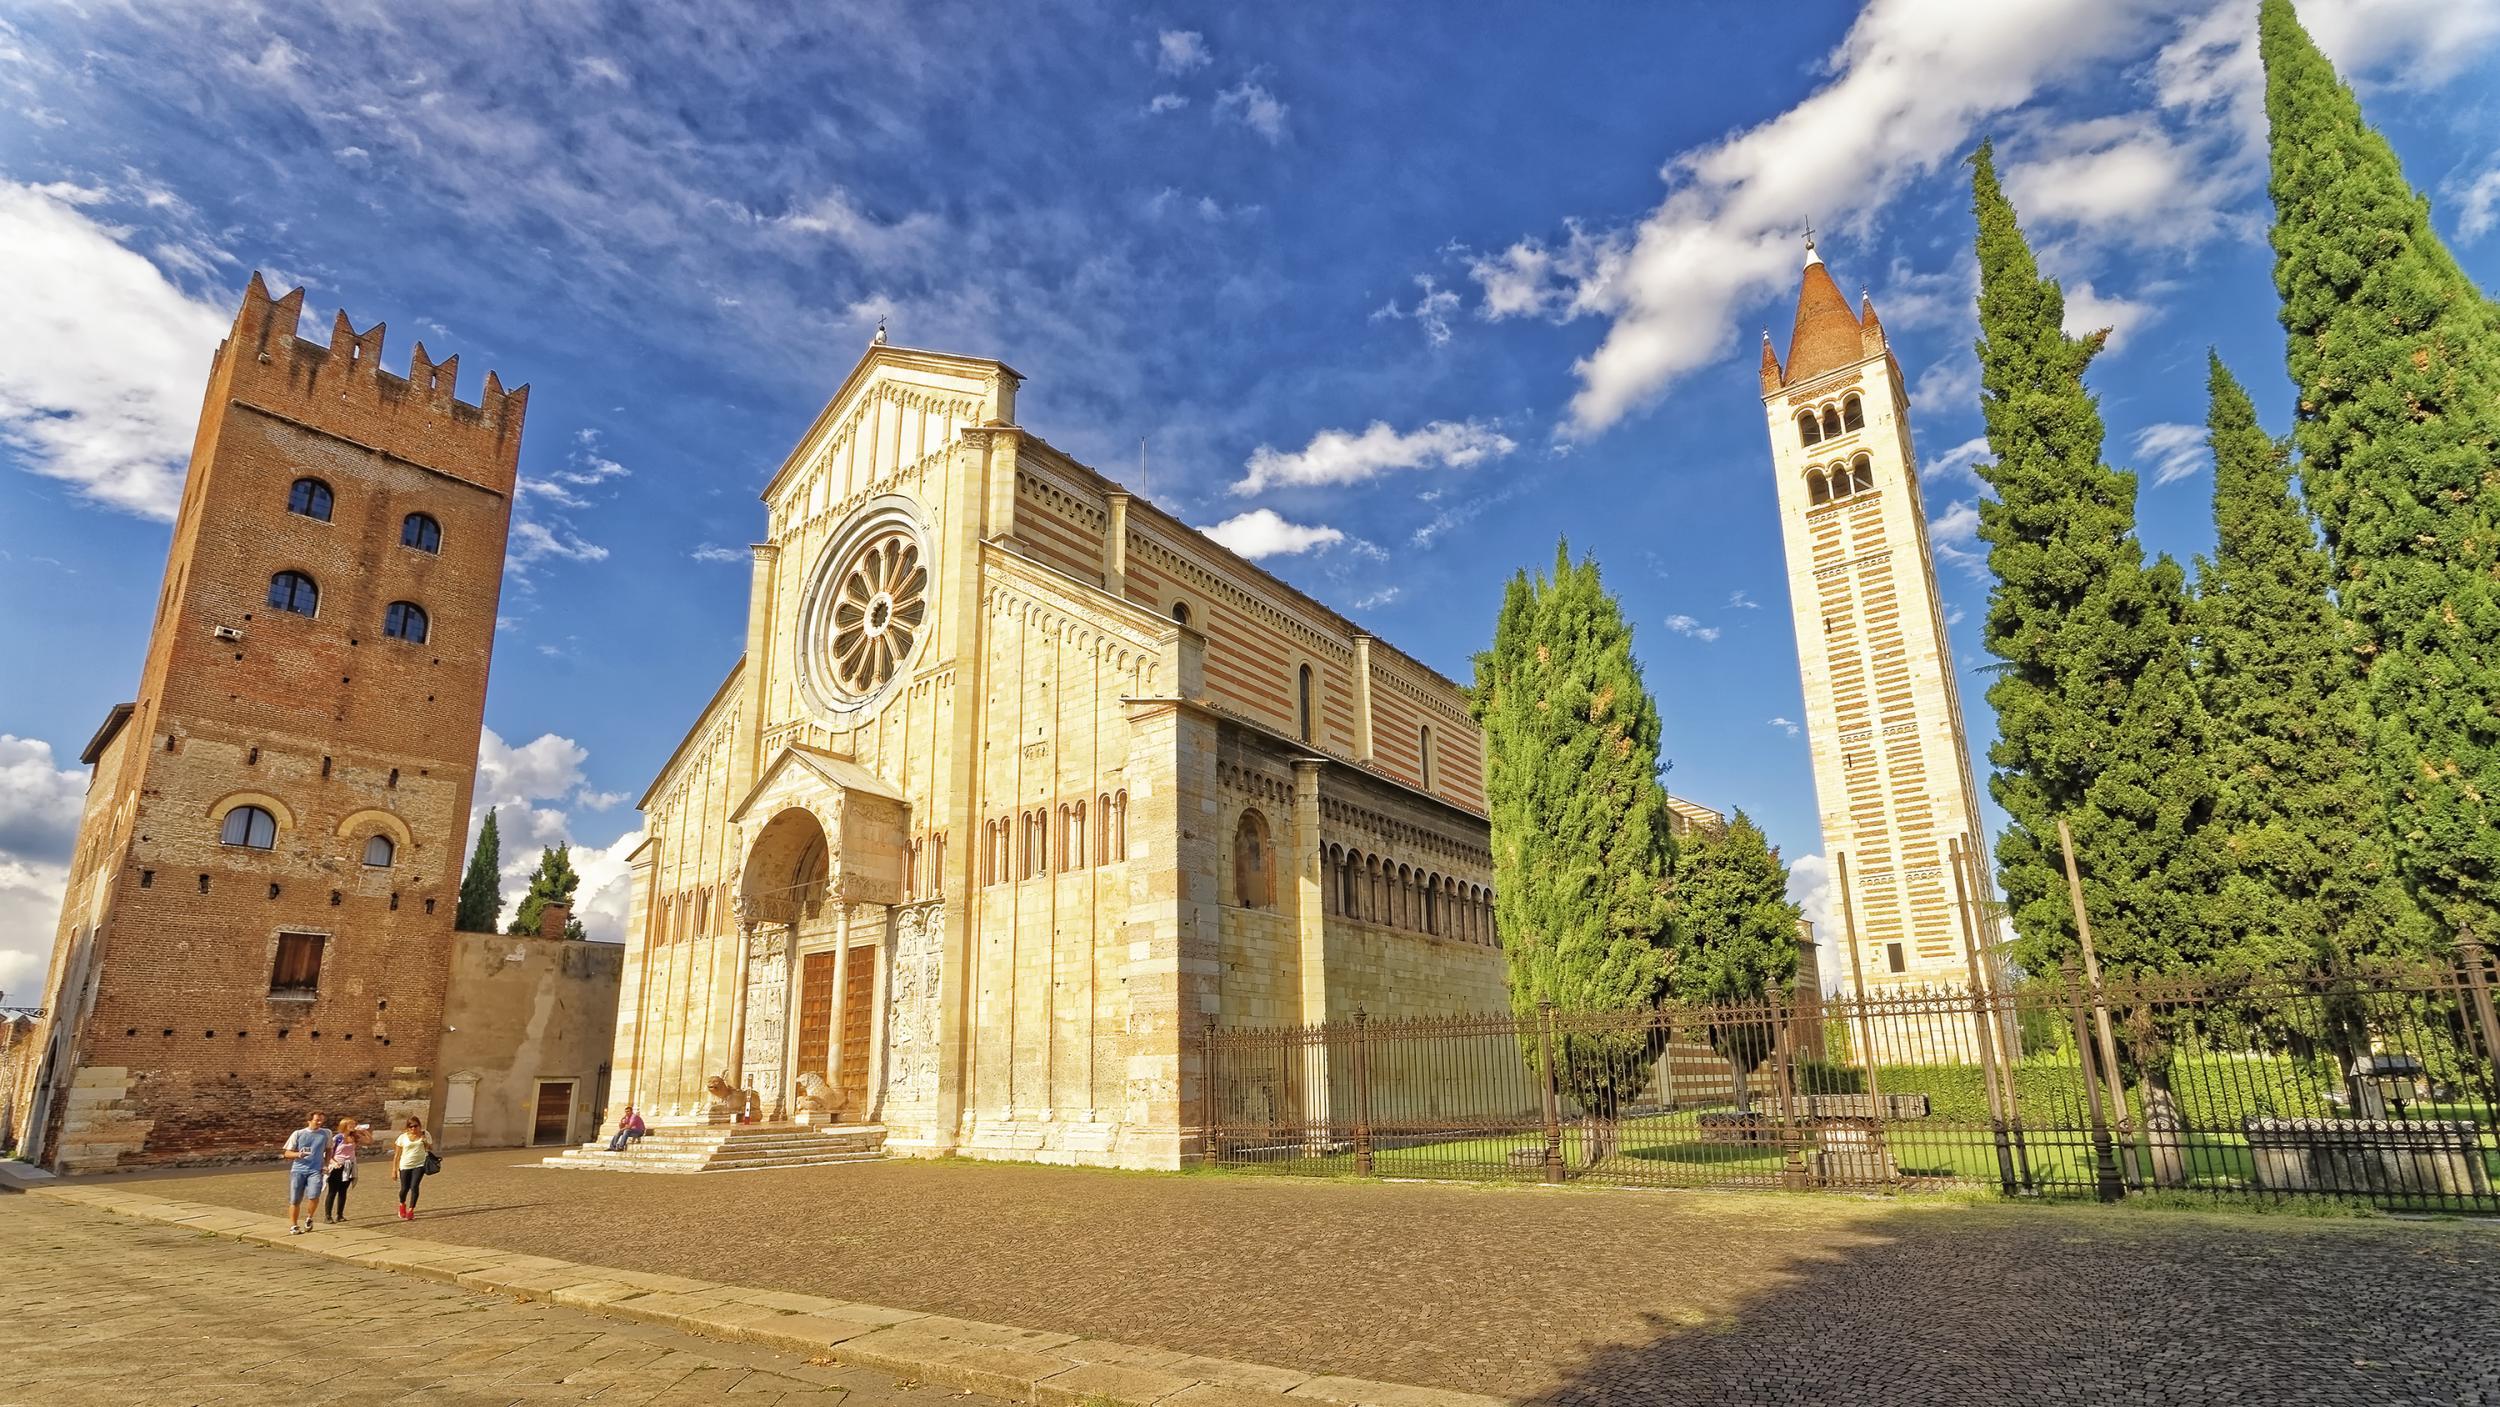 Verona's Basilica di San Zeno is named after the city's patron saint